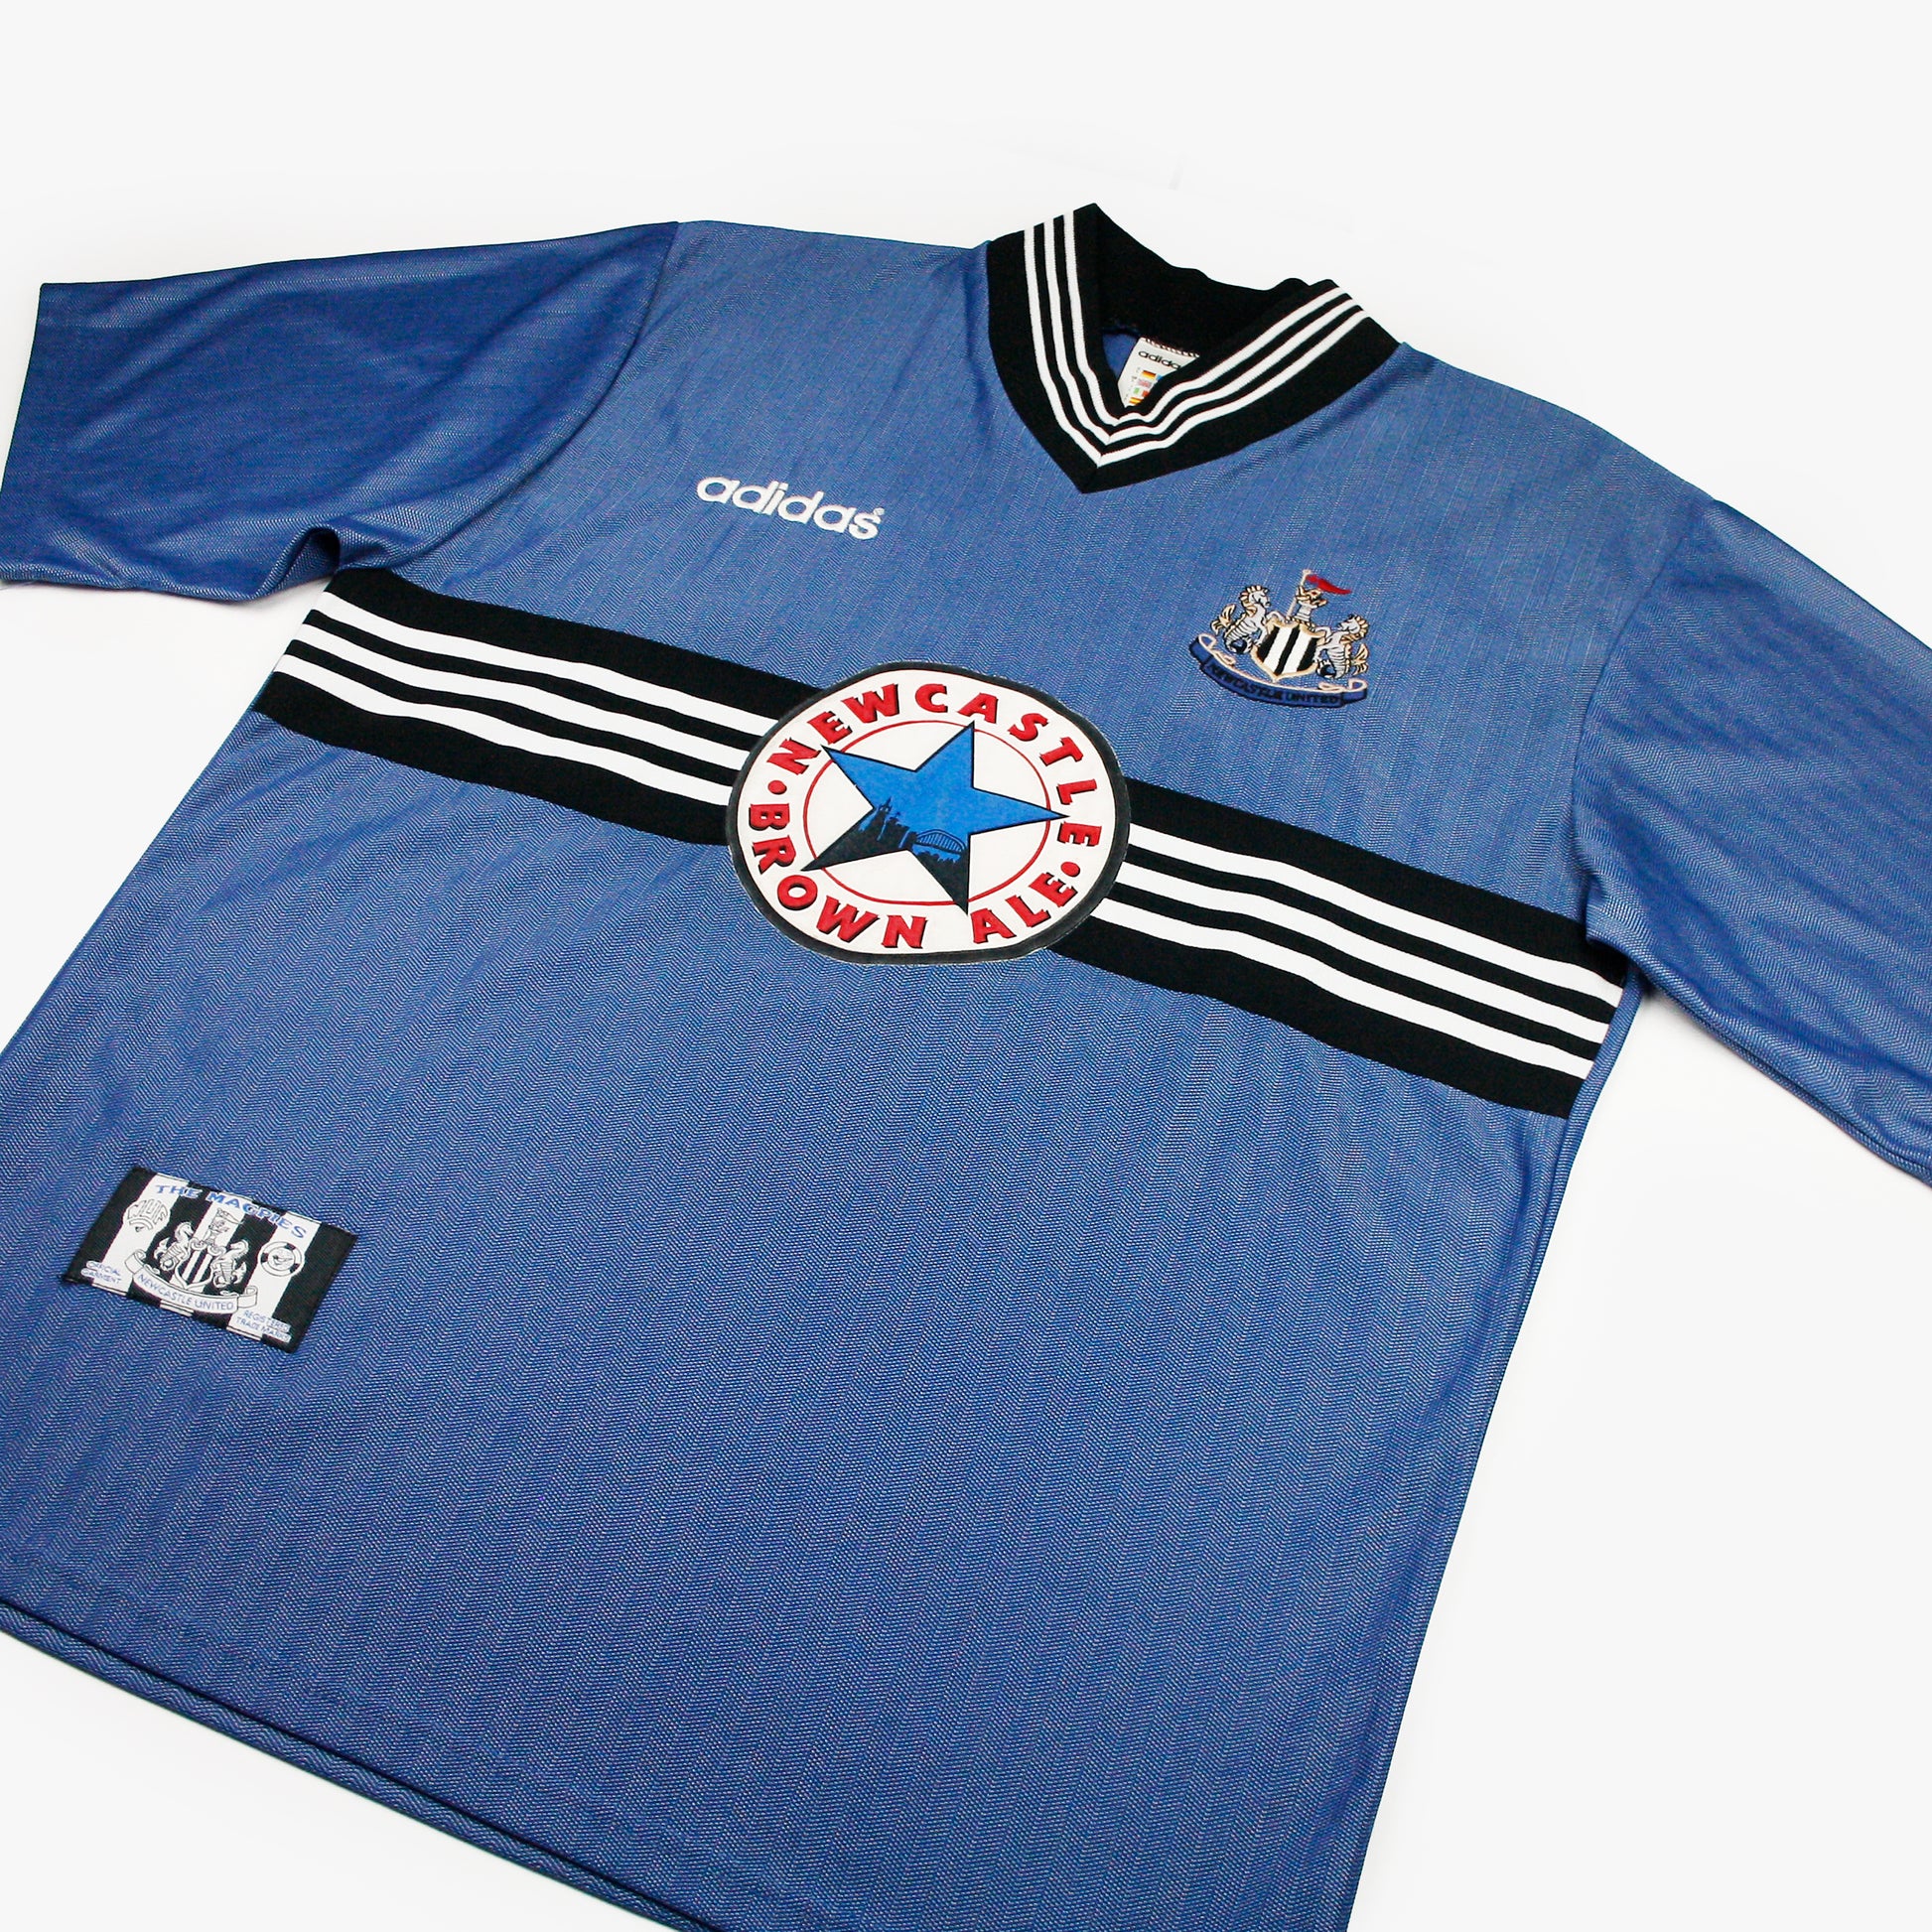 Newcastle United away soccer jersey 1996 - 1997 Asprilla